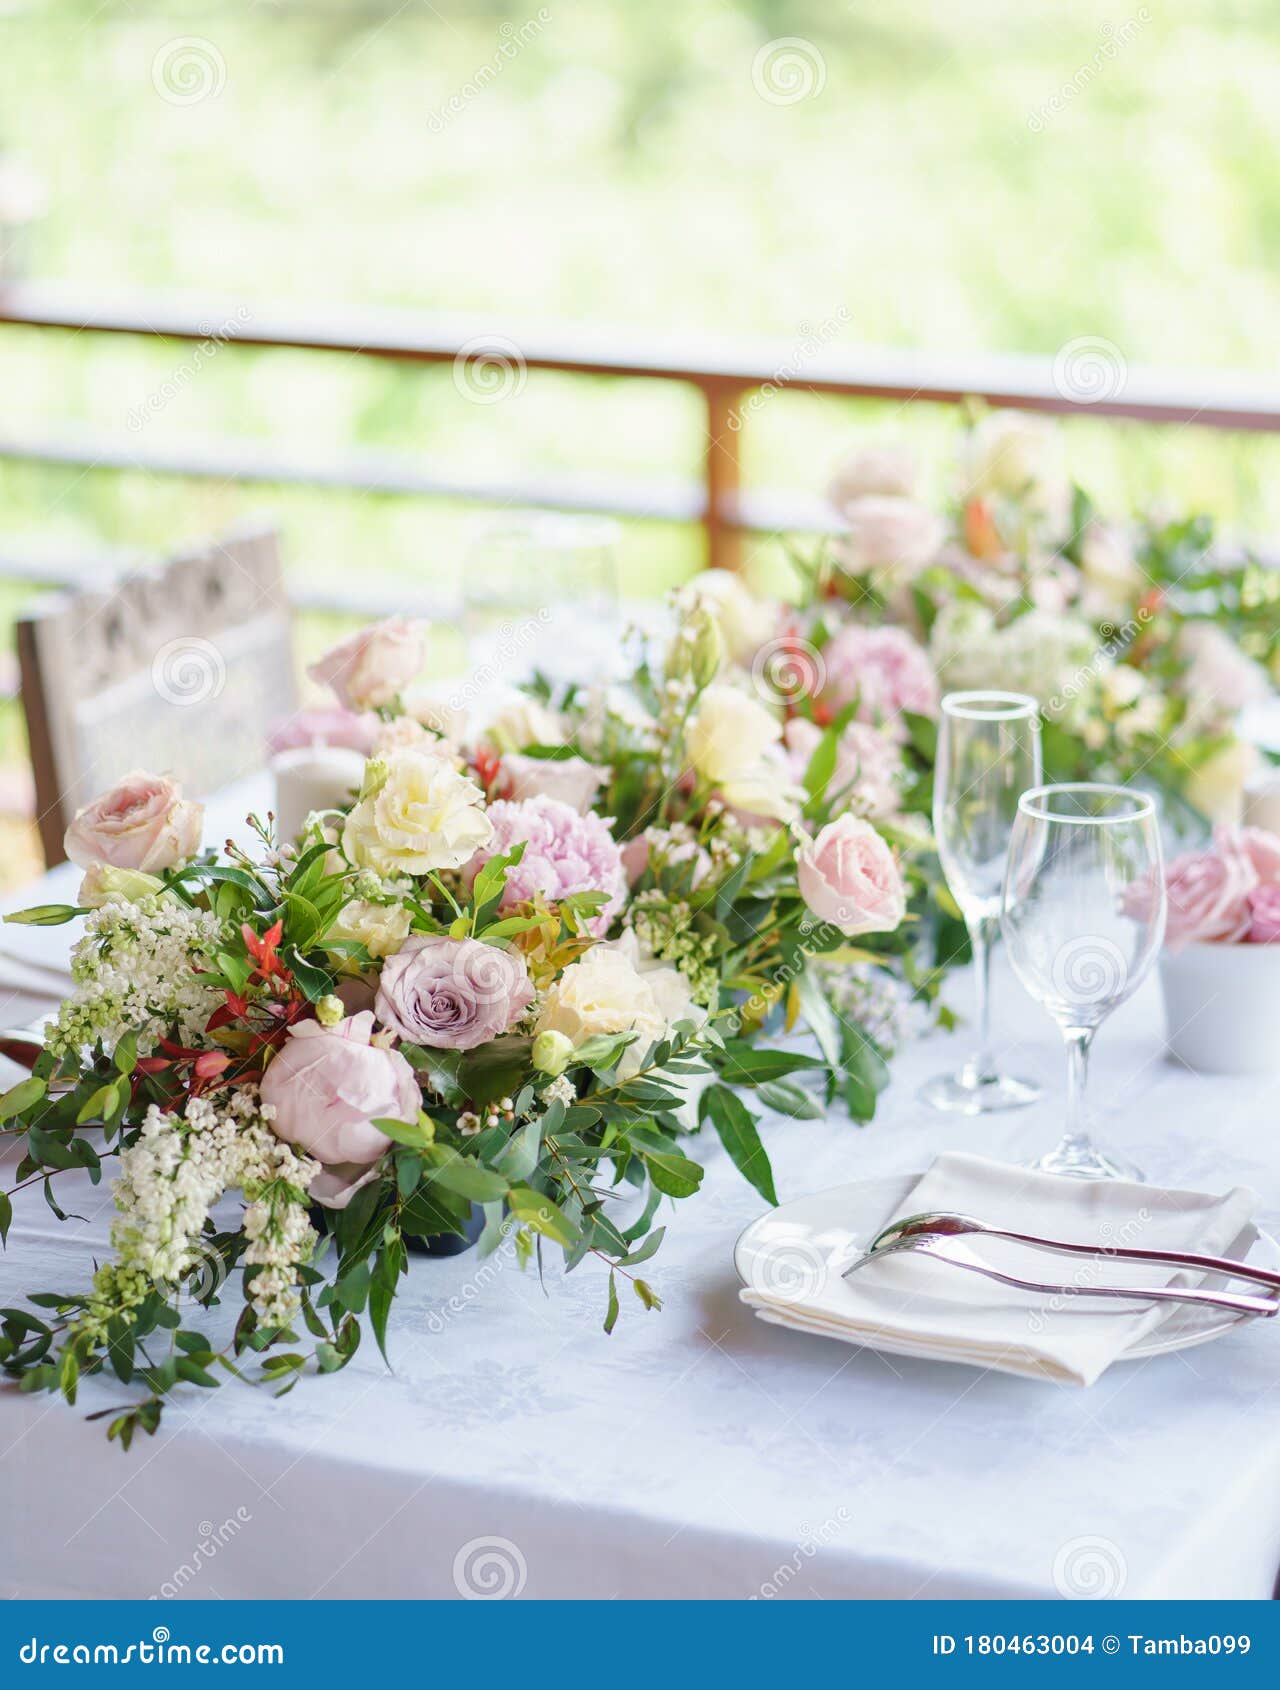 Details about   S4Sassy Ball Dahliya & Rose Floral Room Tablemats With Napkins set-FL-607J 